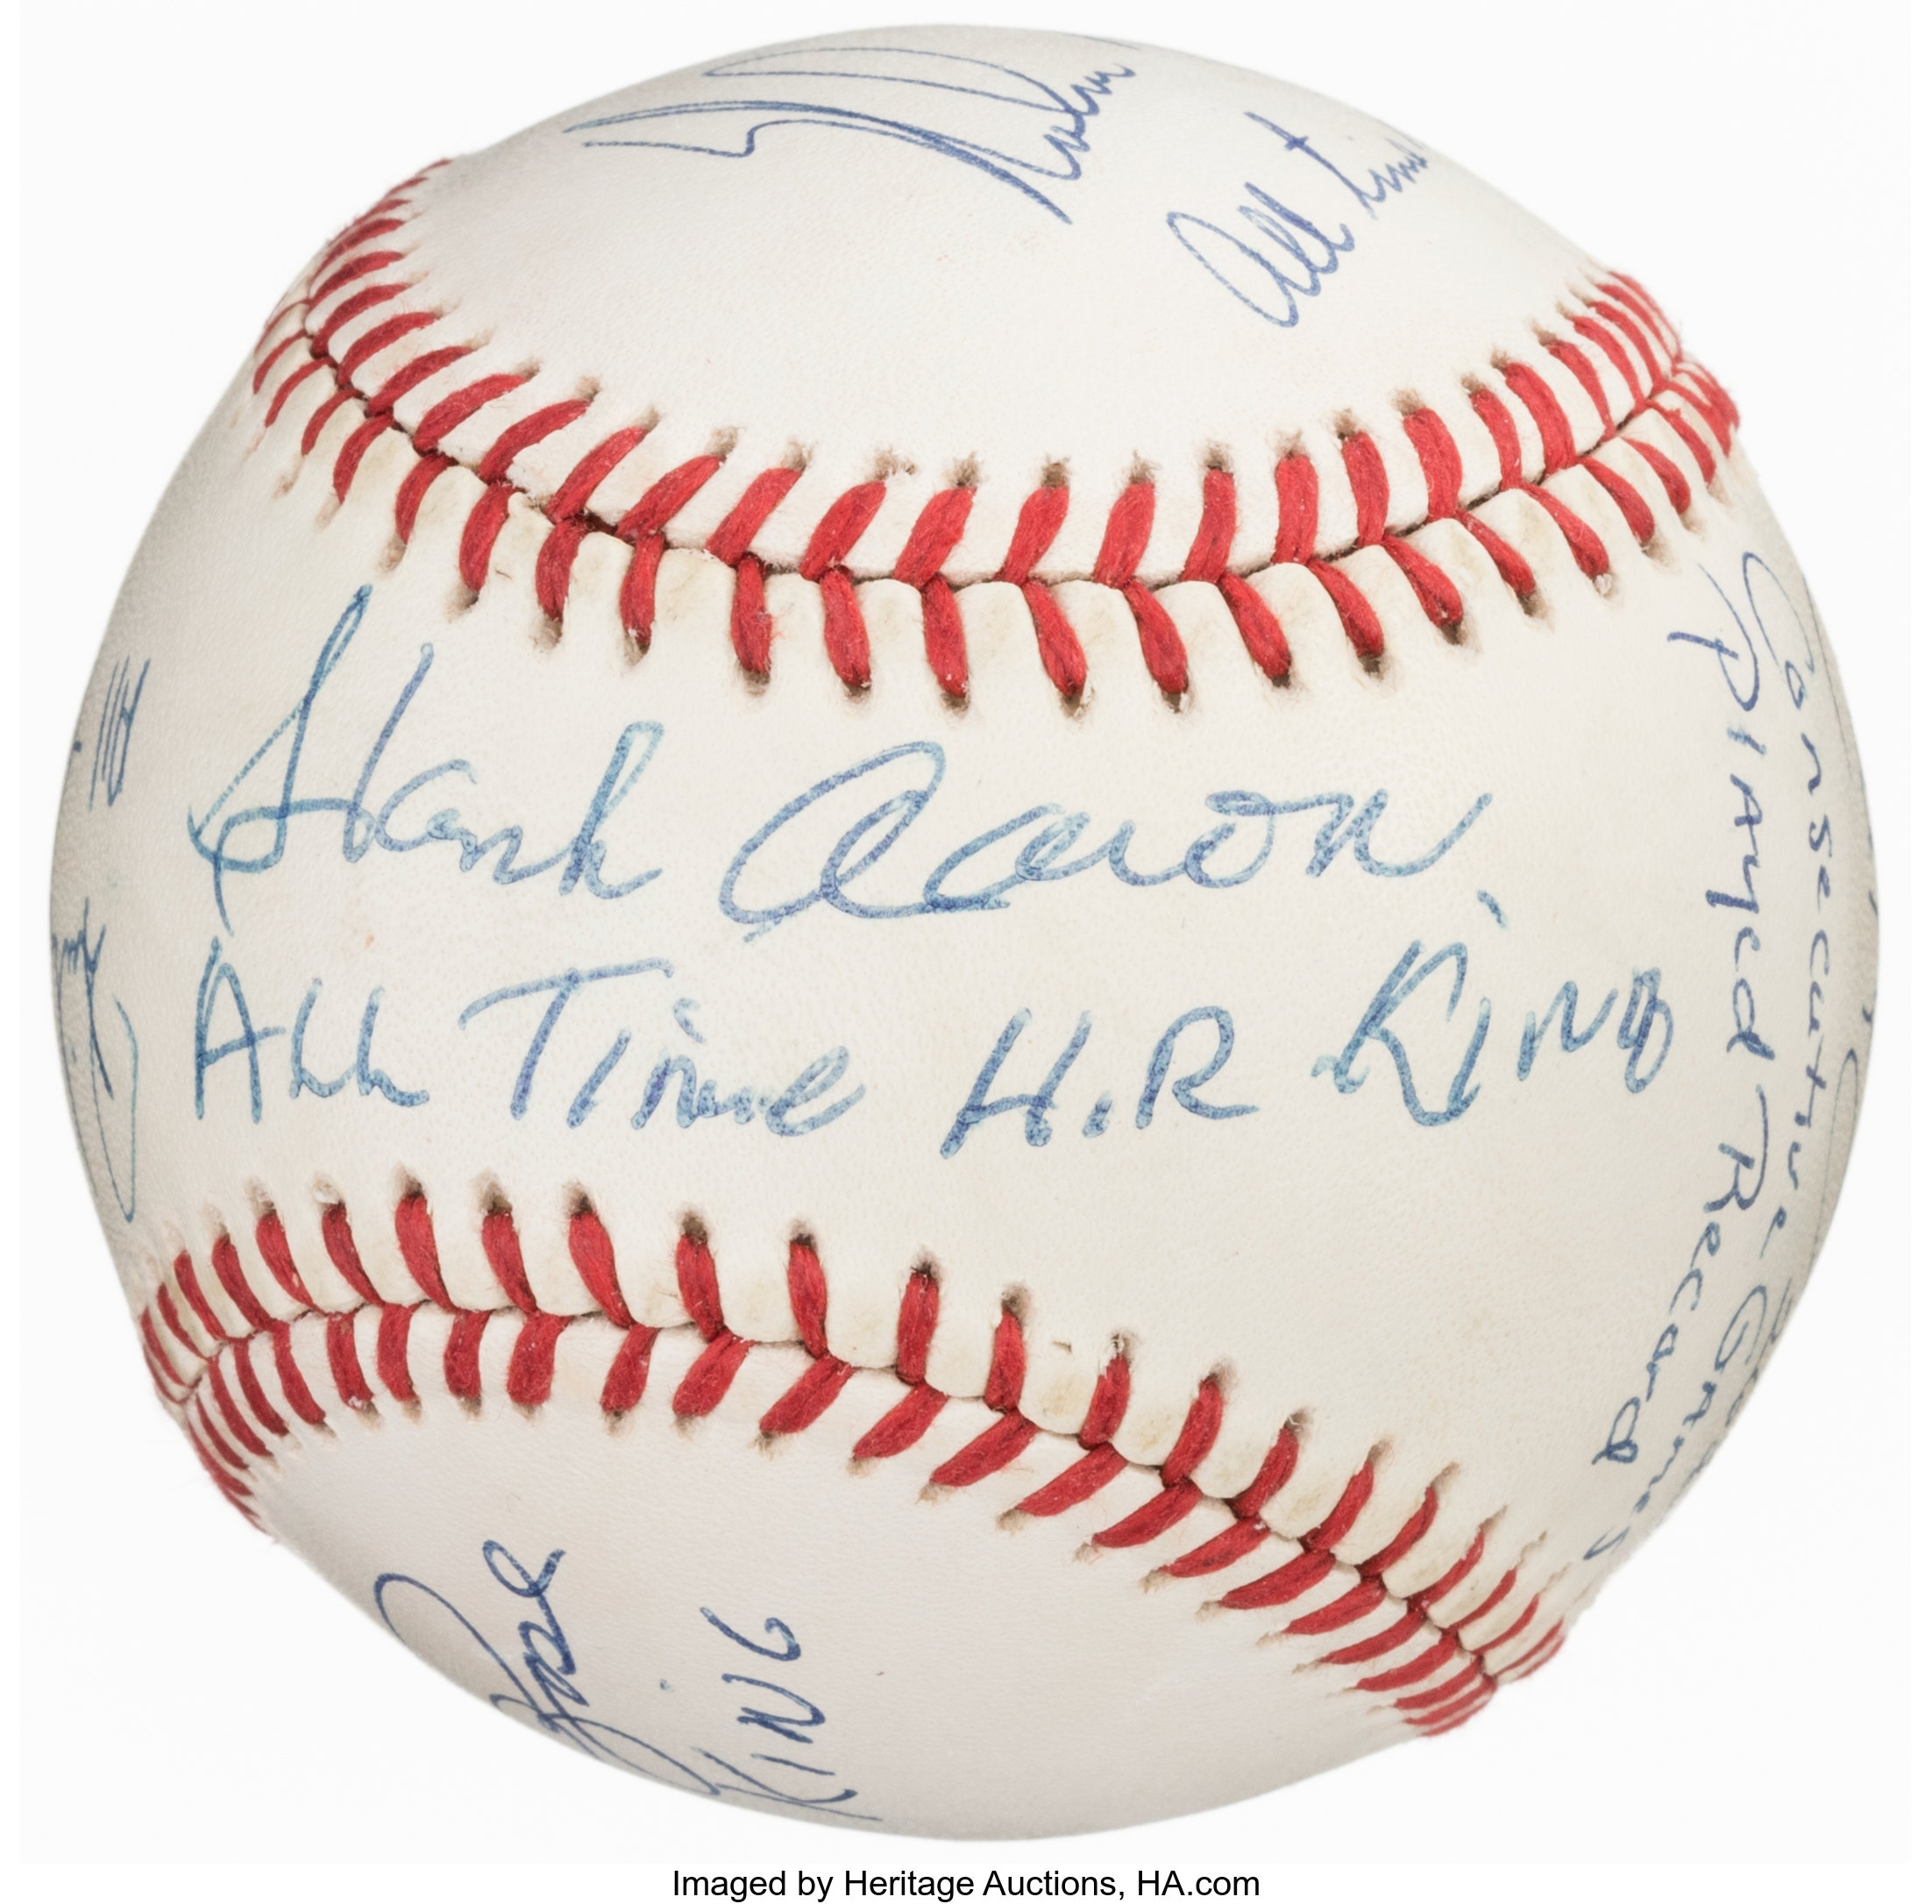 Hank Aaron and Cal Ripken, Jr Signed Jersey Displays (2)